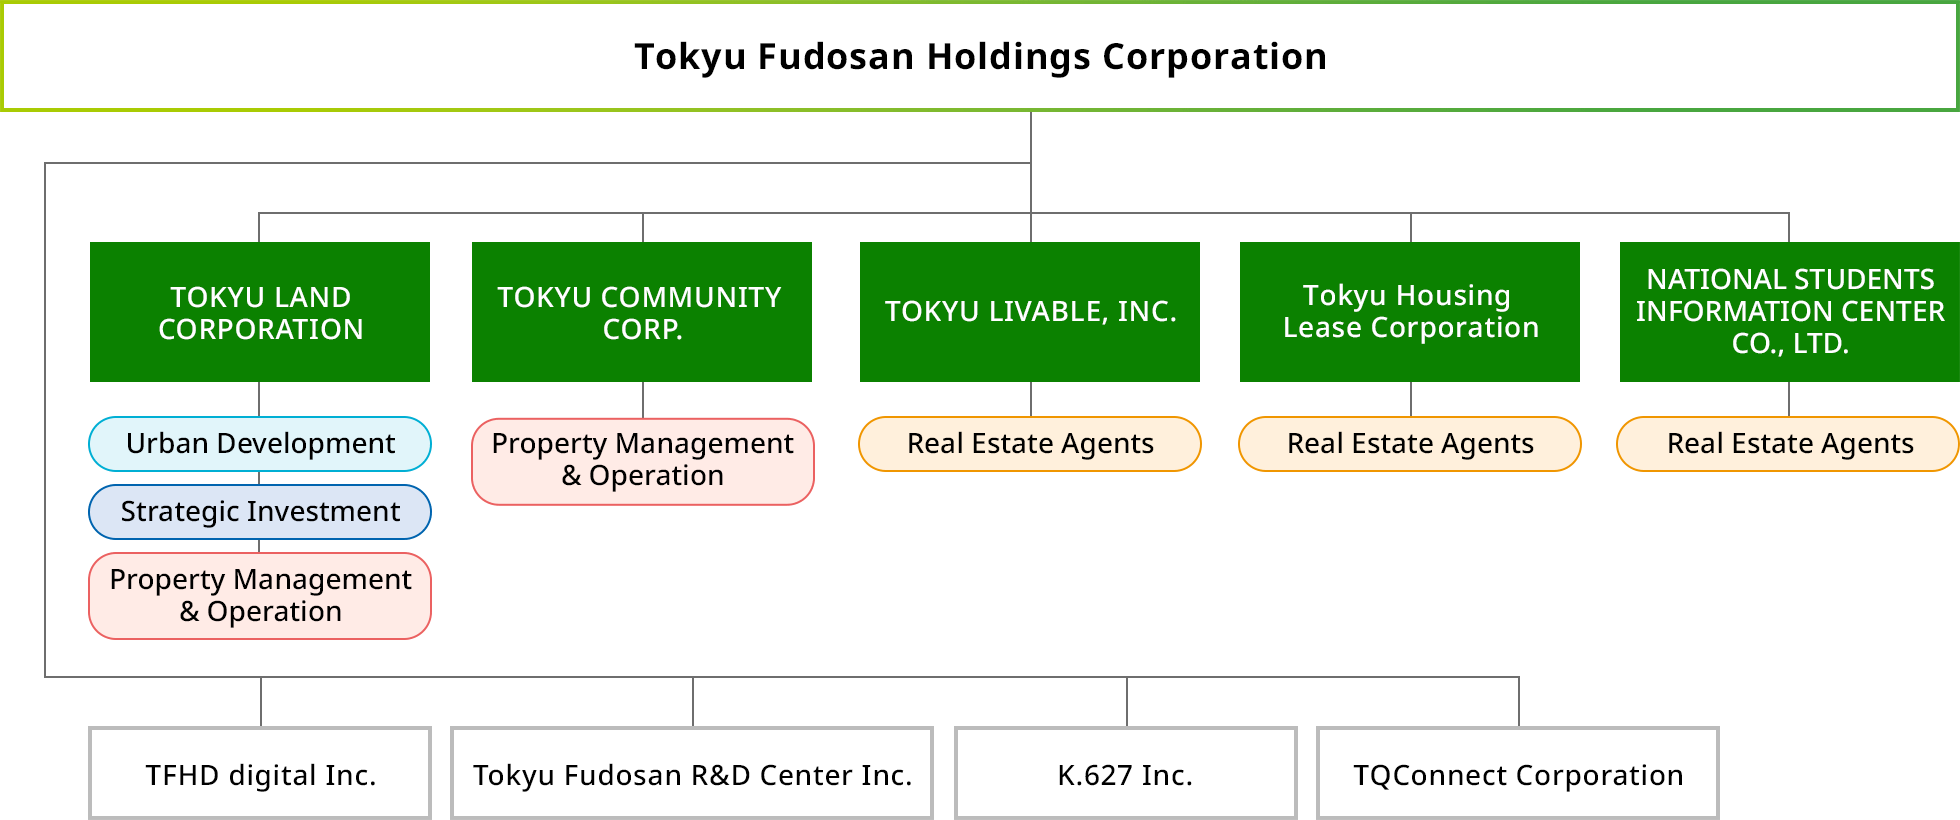 Tokyu Fudosan Holdings